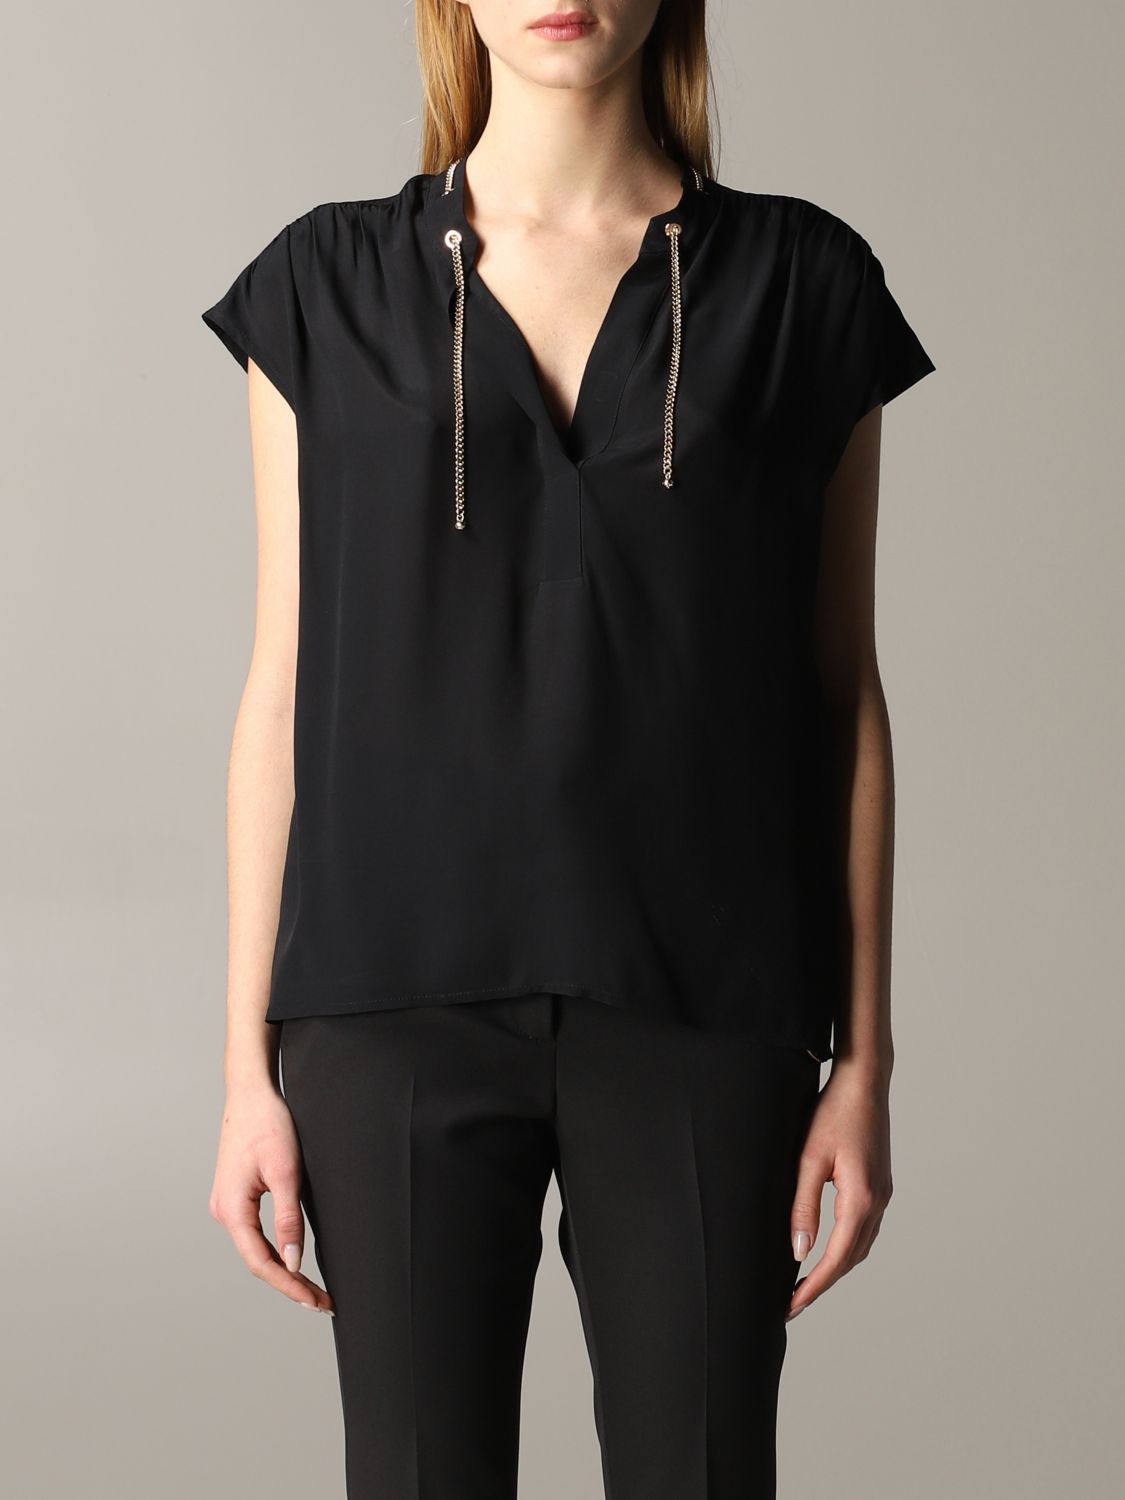 Liu Jo Outlet: shirt with jewel chain - Black | Liu Jo shirt PA0146T5888 GIGLIO.COM